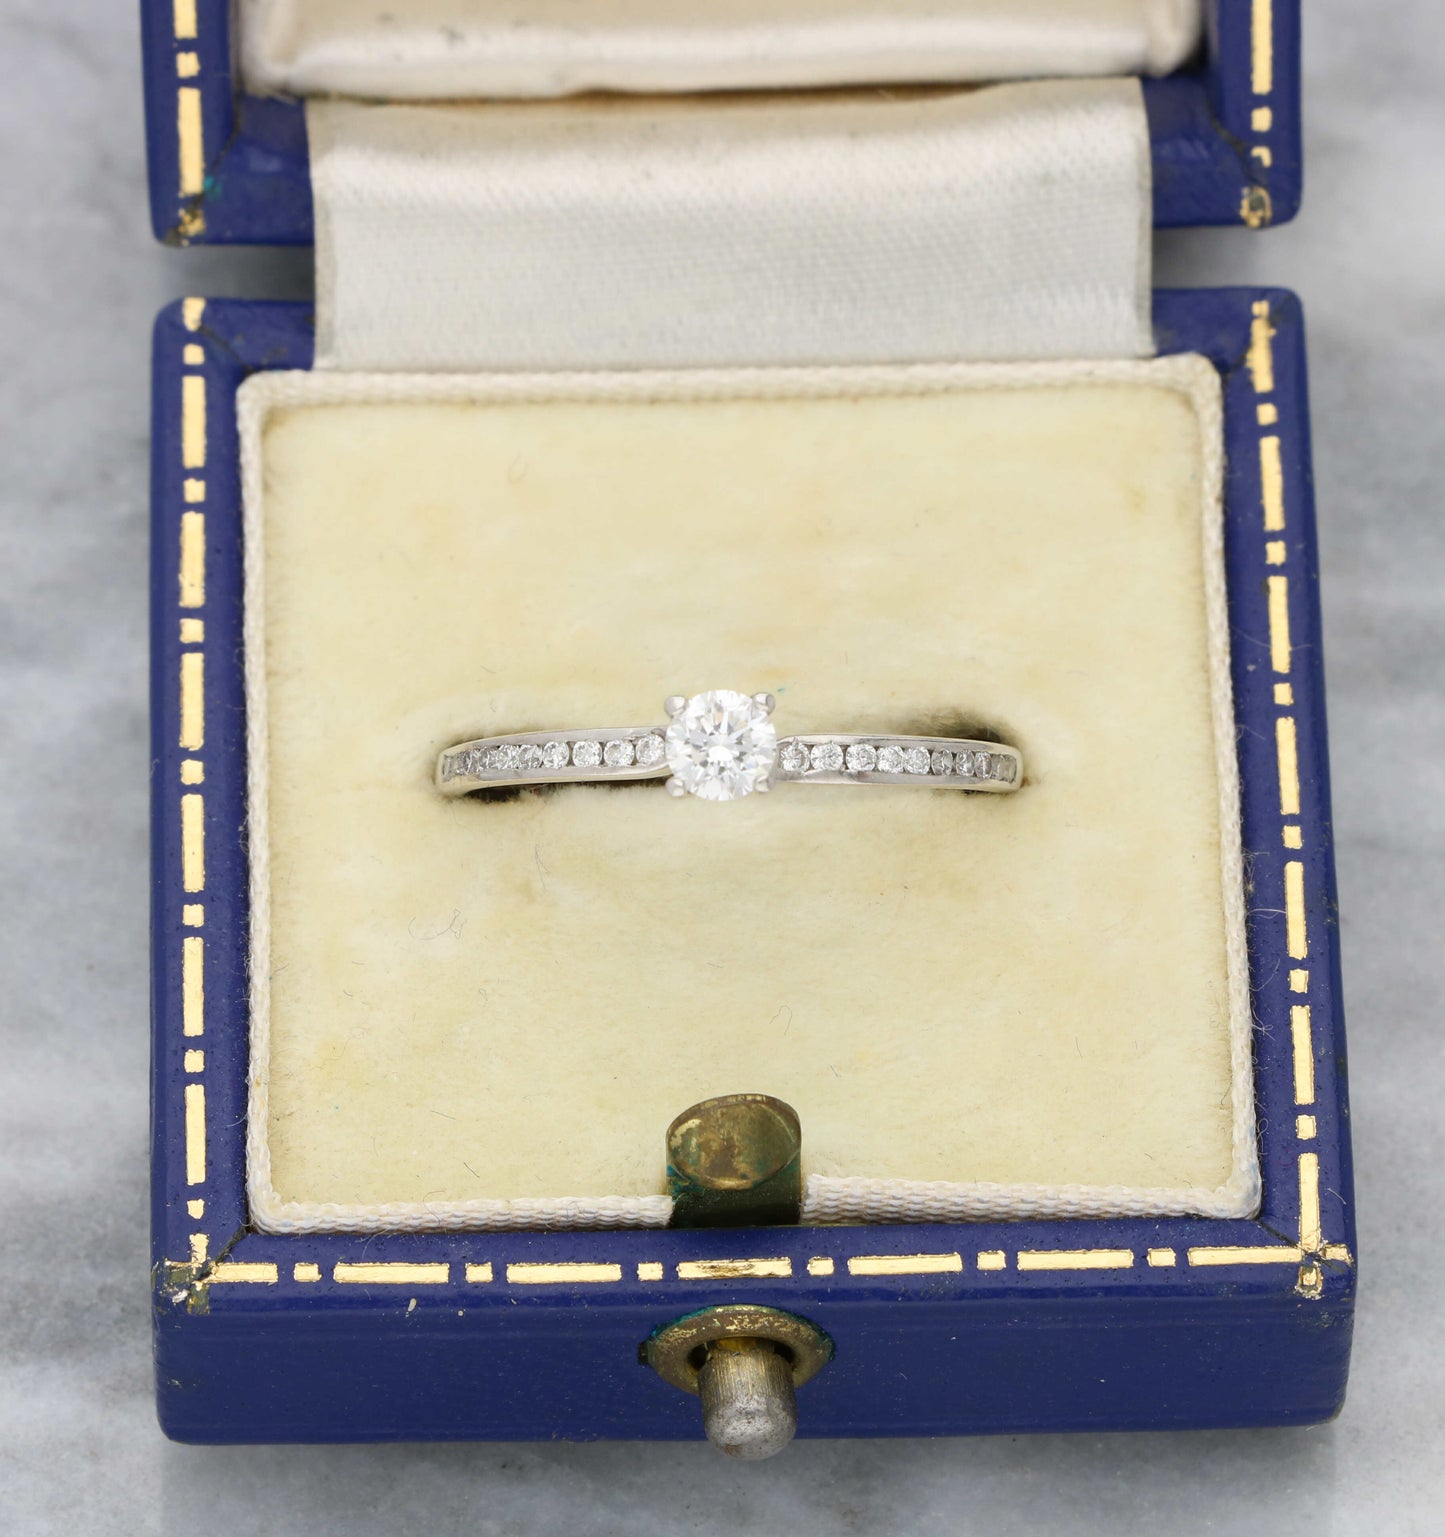 18ct diamond engagement ring